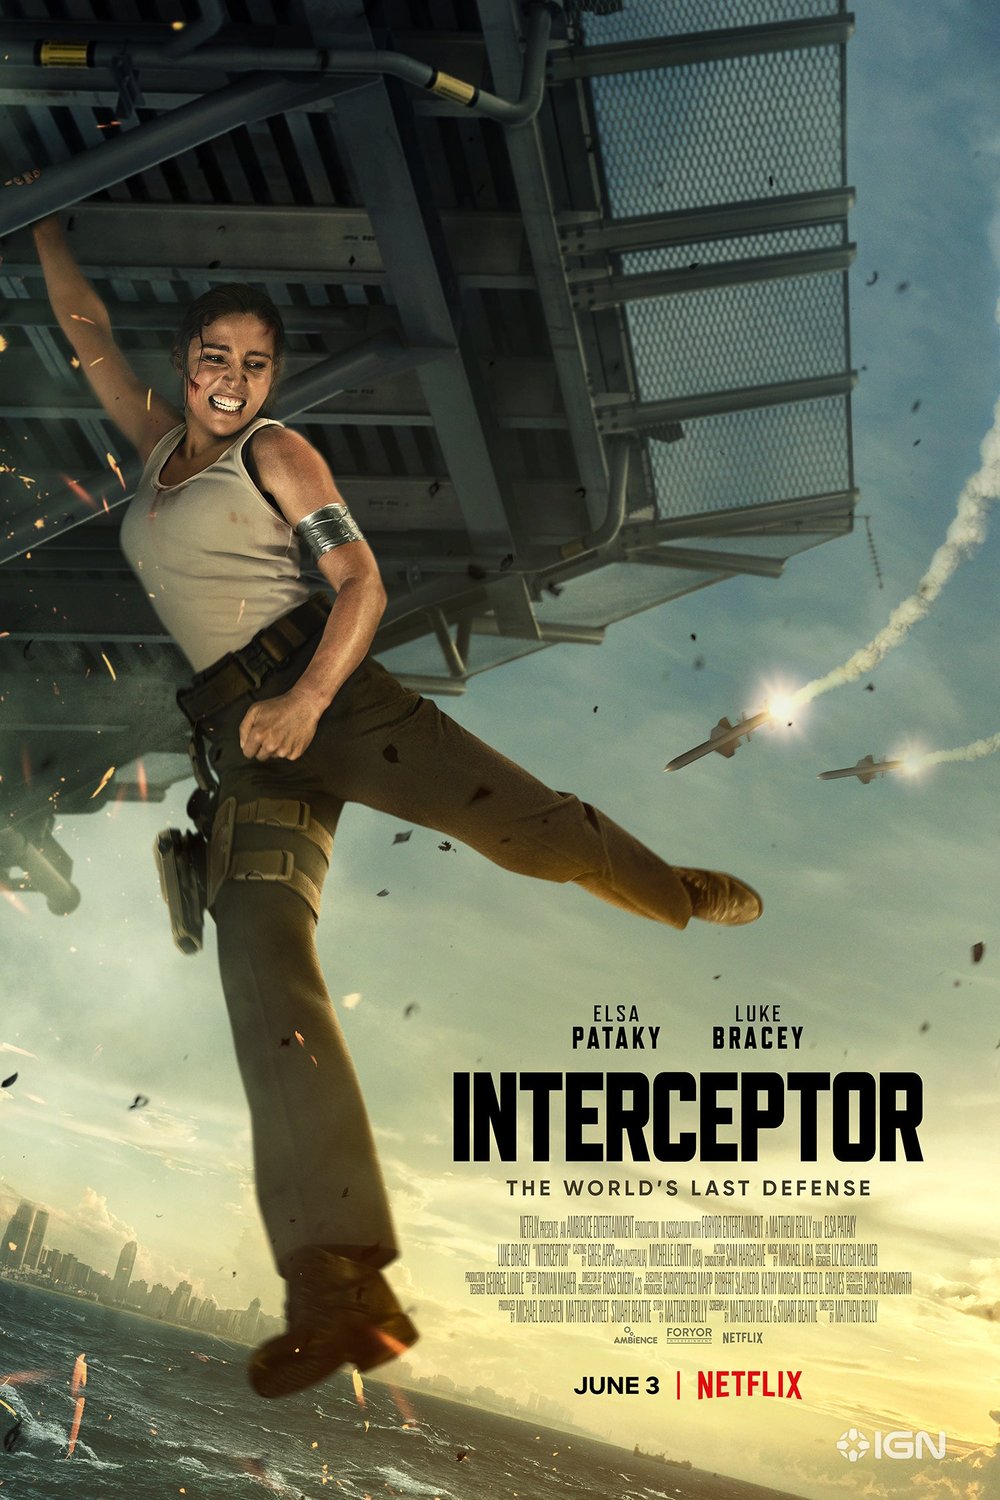 Poster of the movie Interceptor